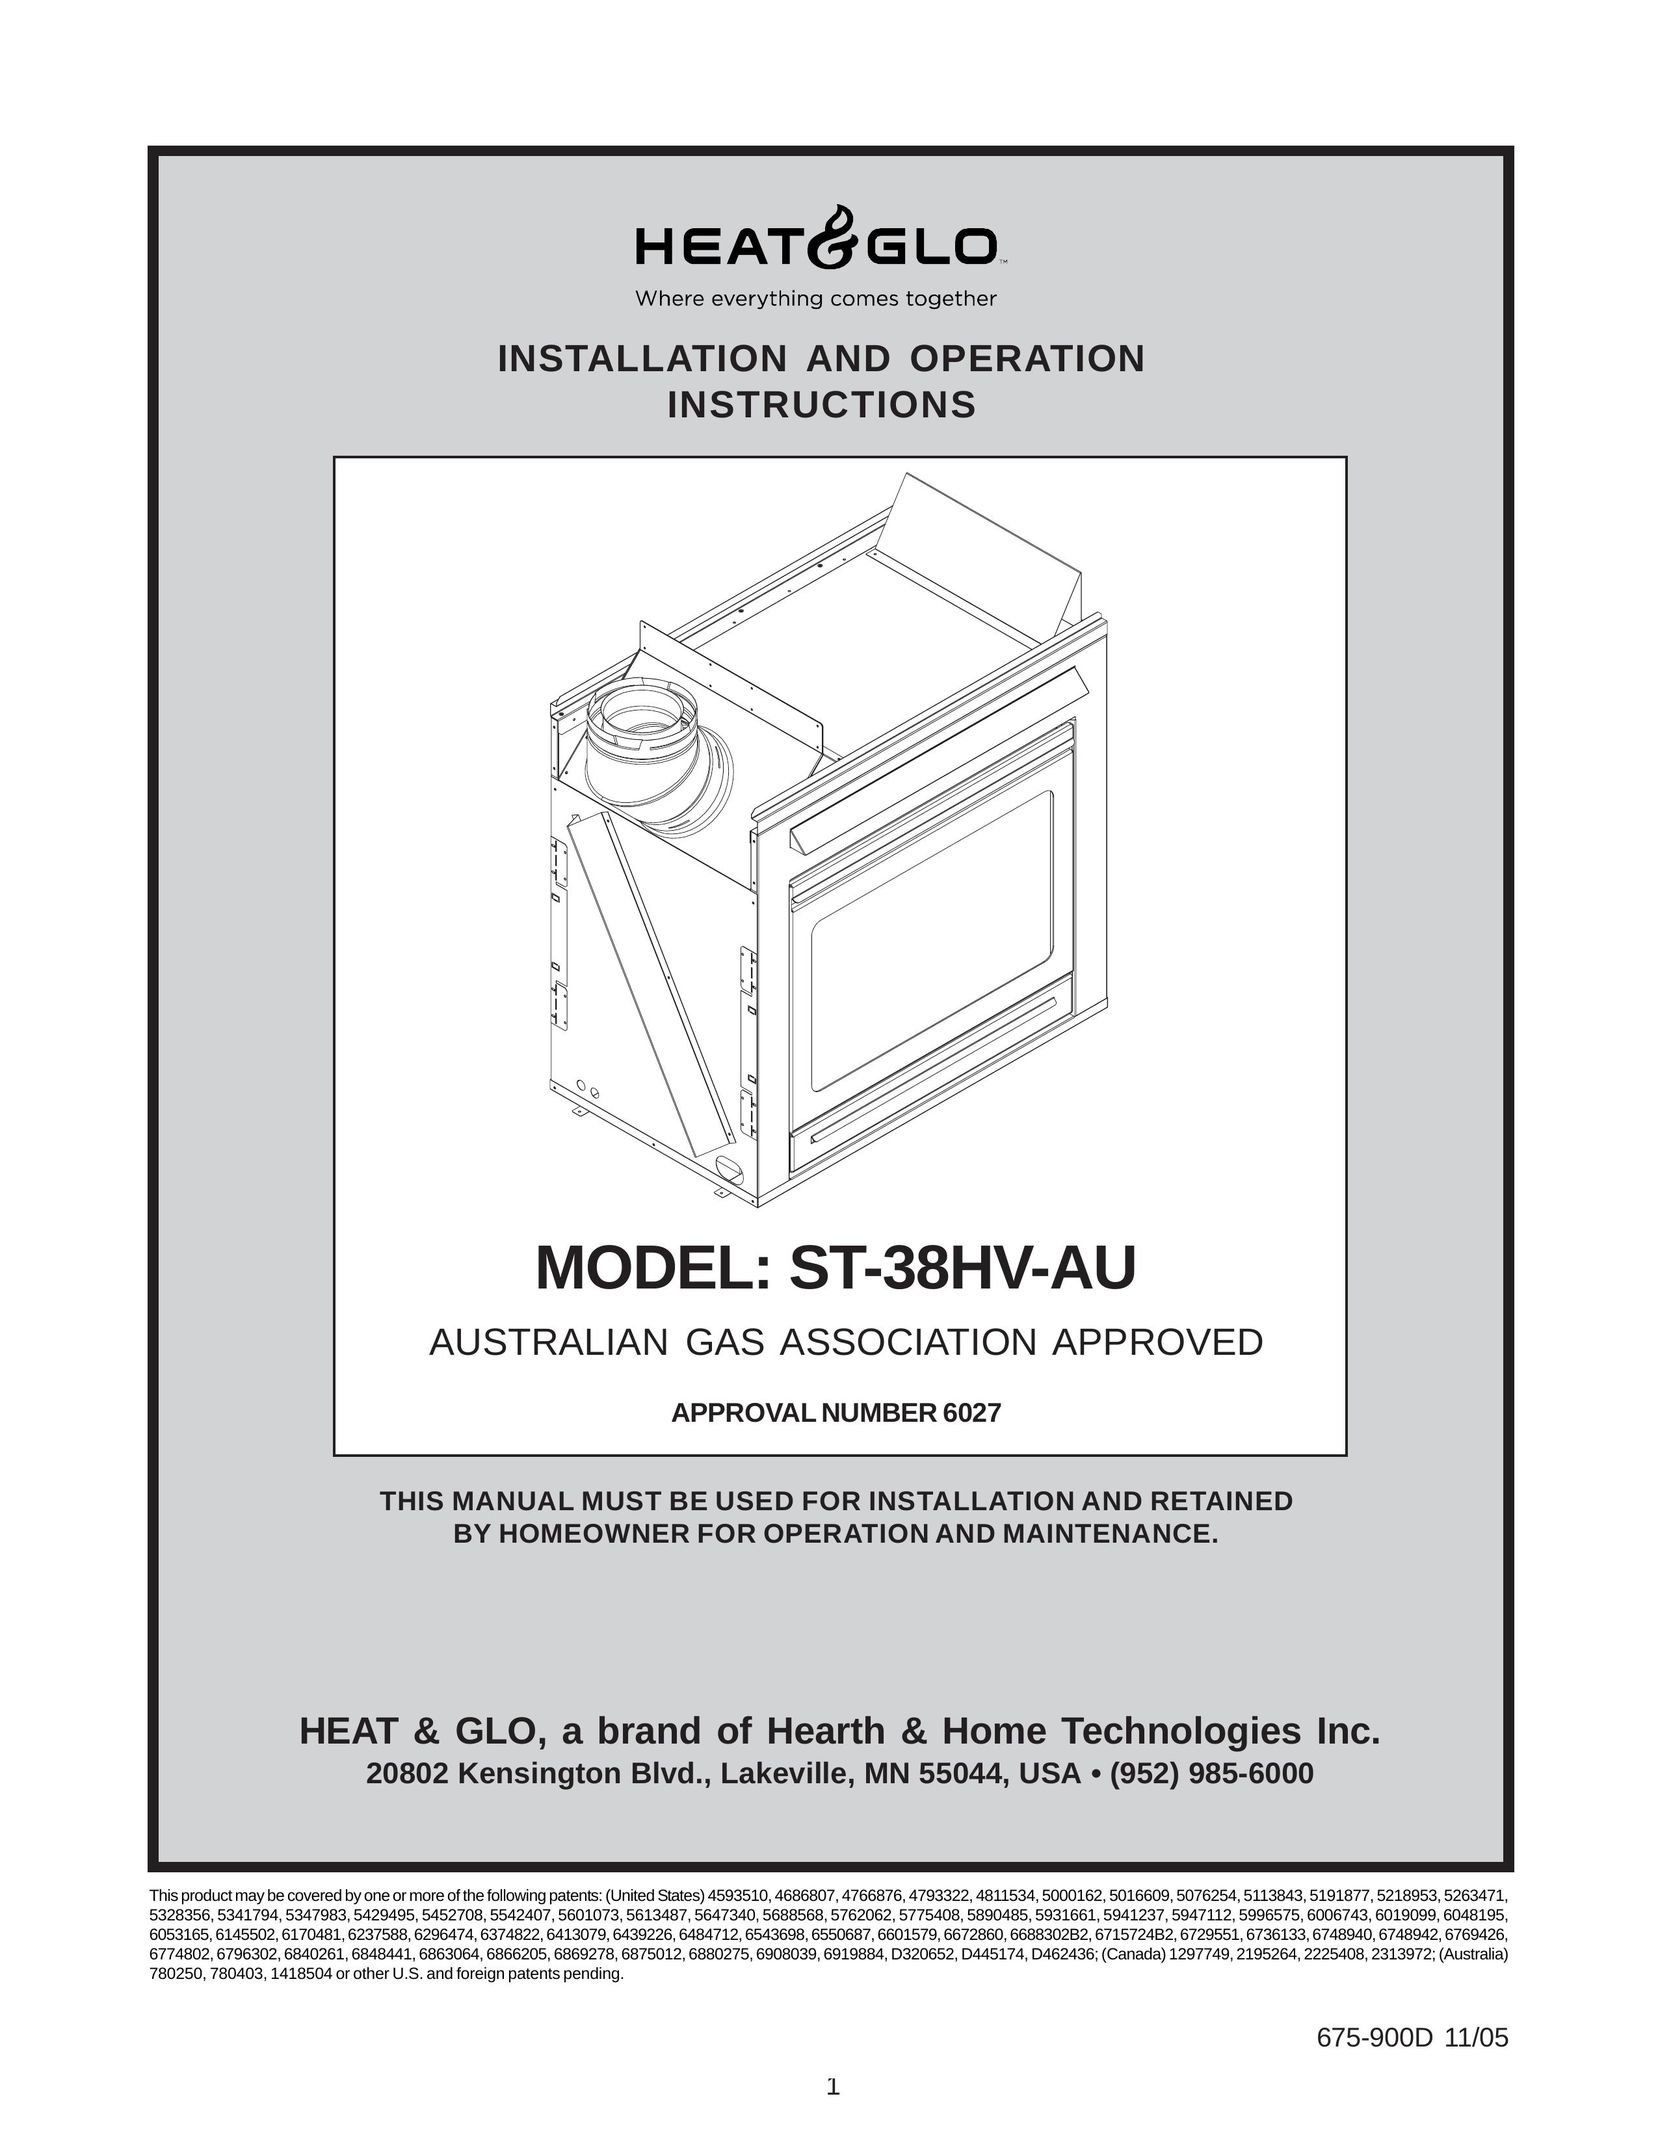 Heat & Glo LifeStyle ST-38HV-AU Gas Heater User Manual